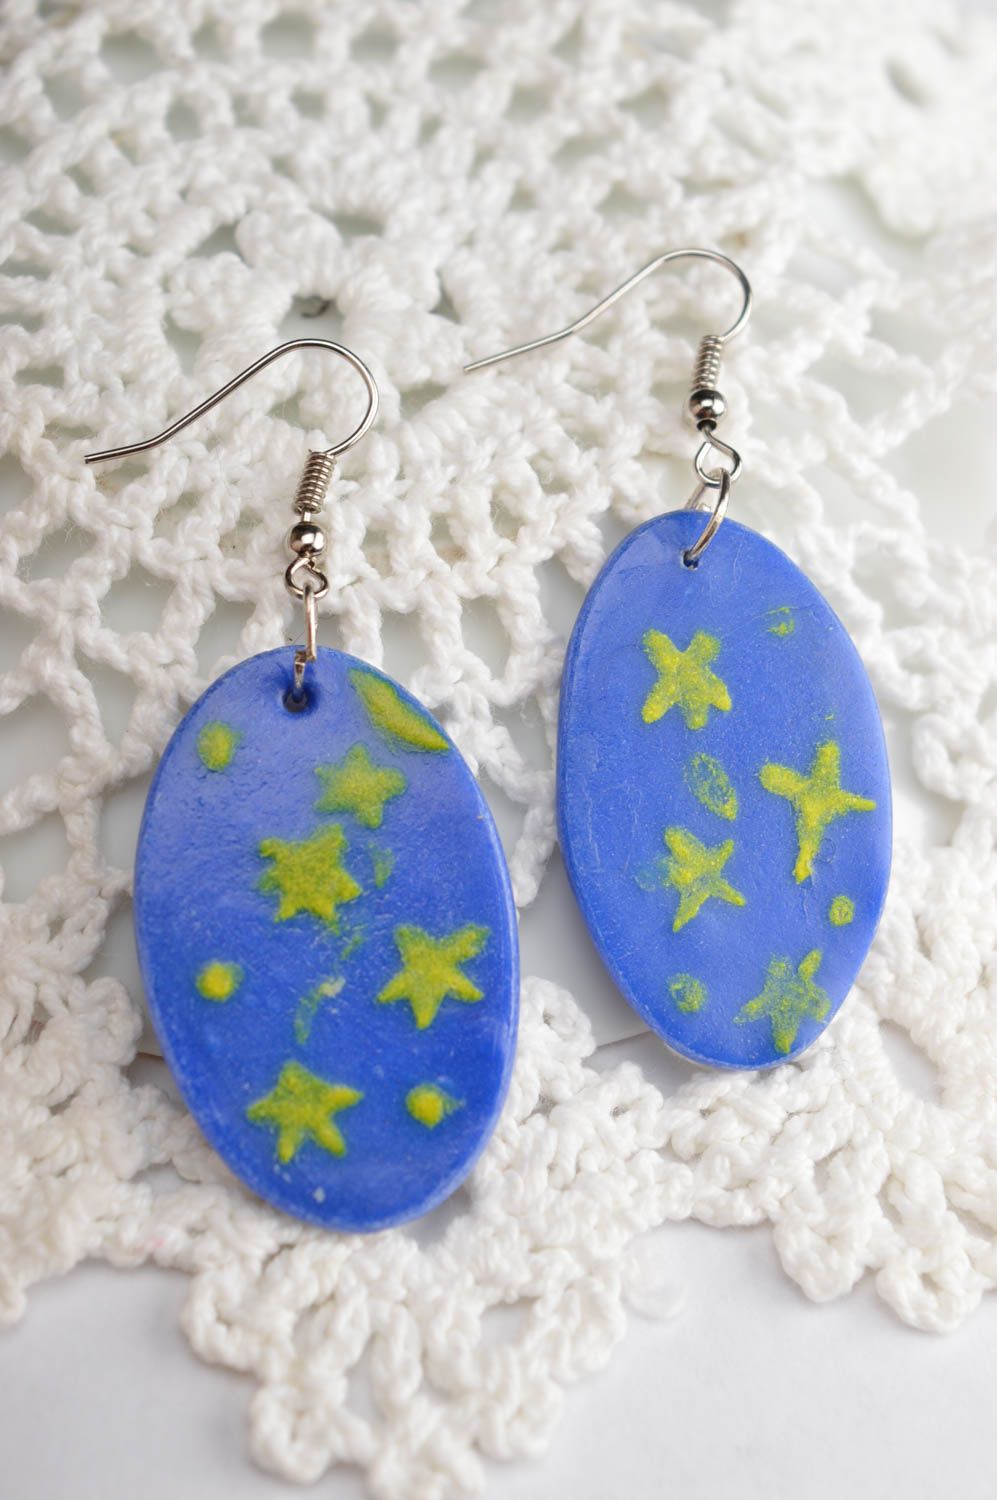 Stylish handmade earrings plastic dangle earrings modern jewelry gift ideas photo 1